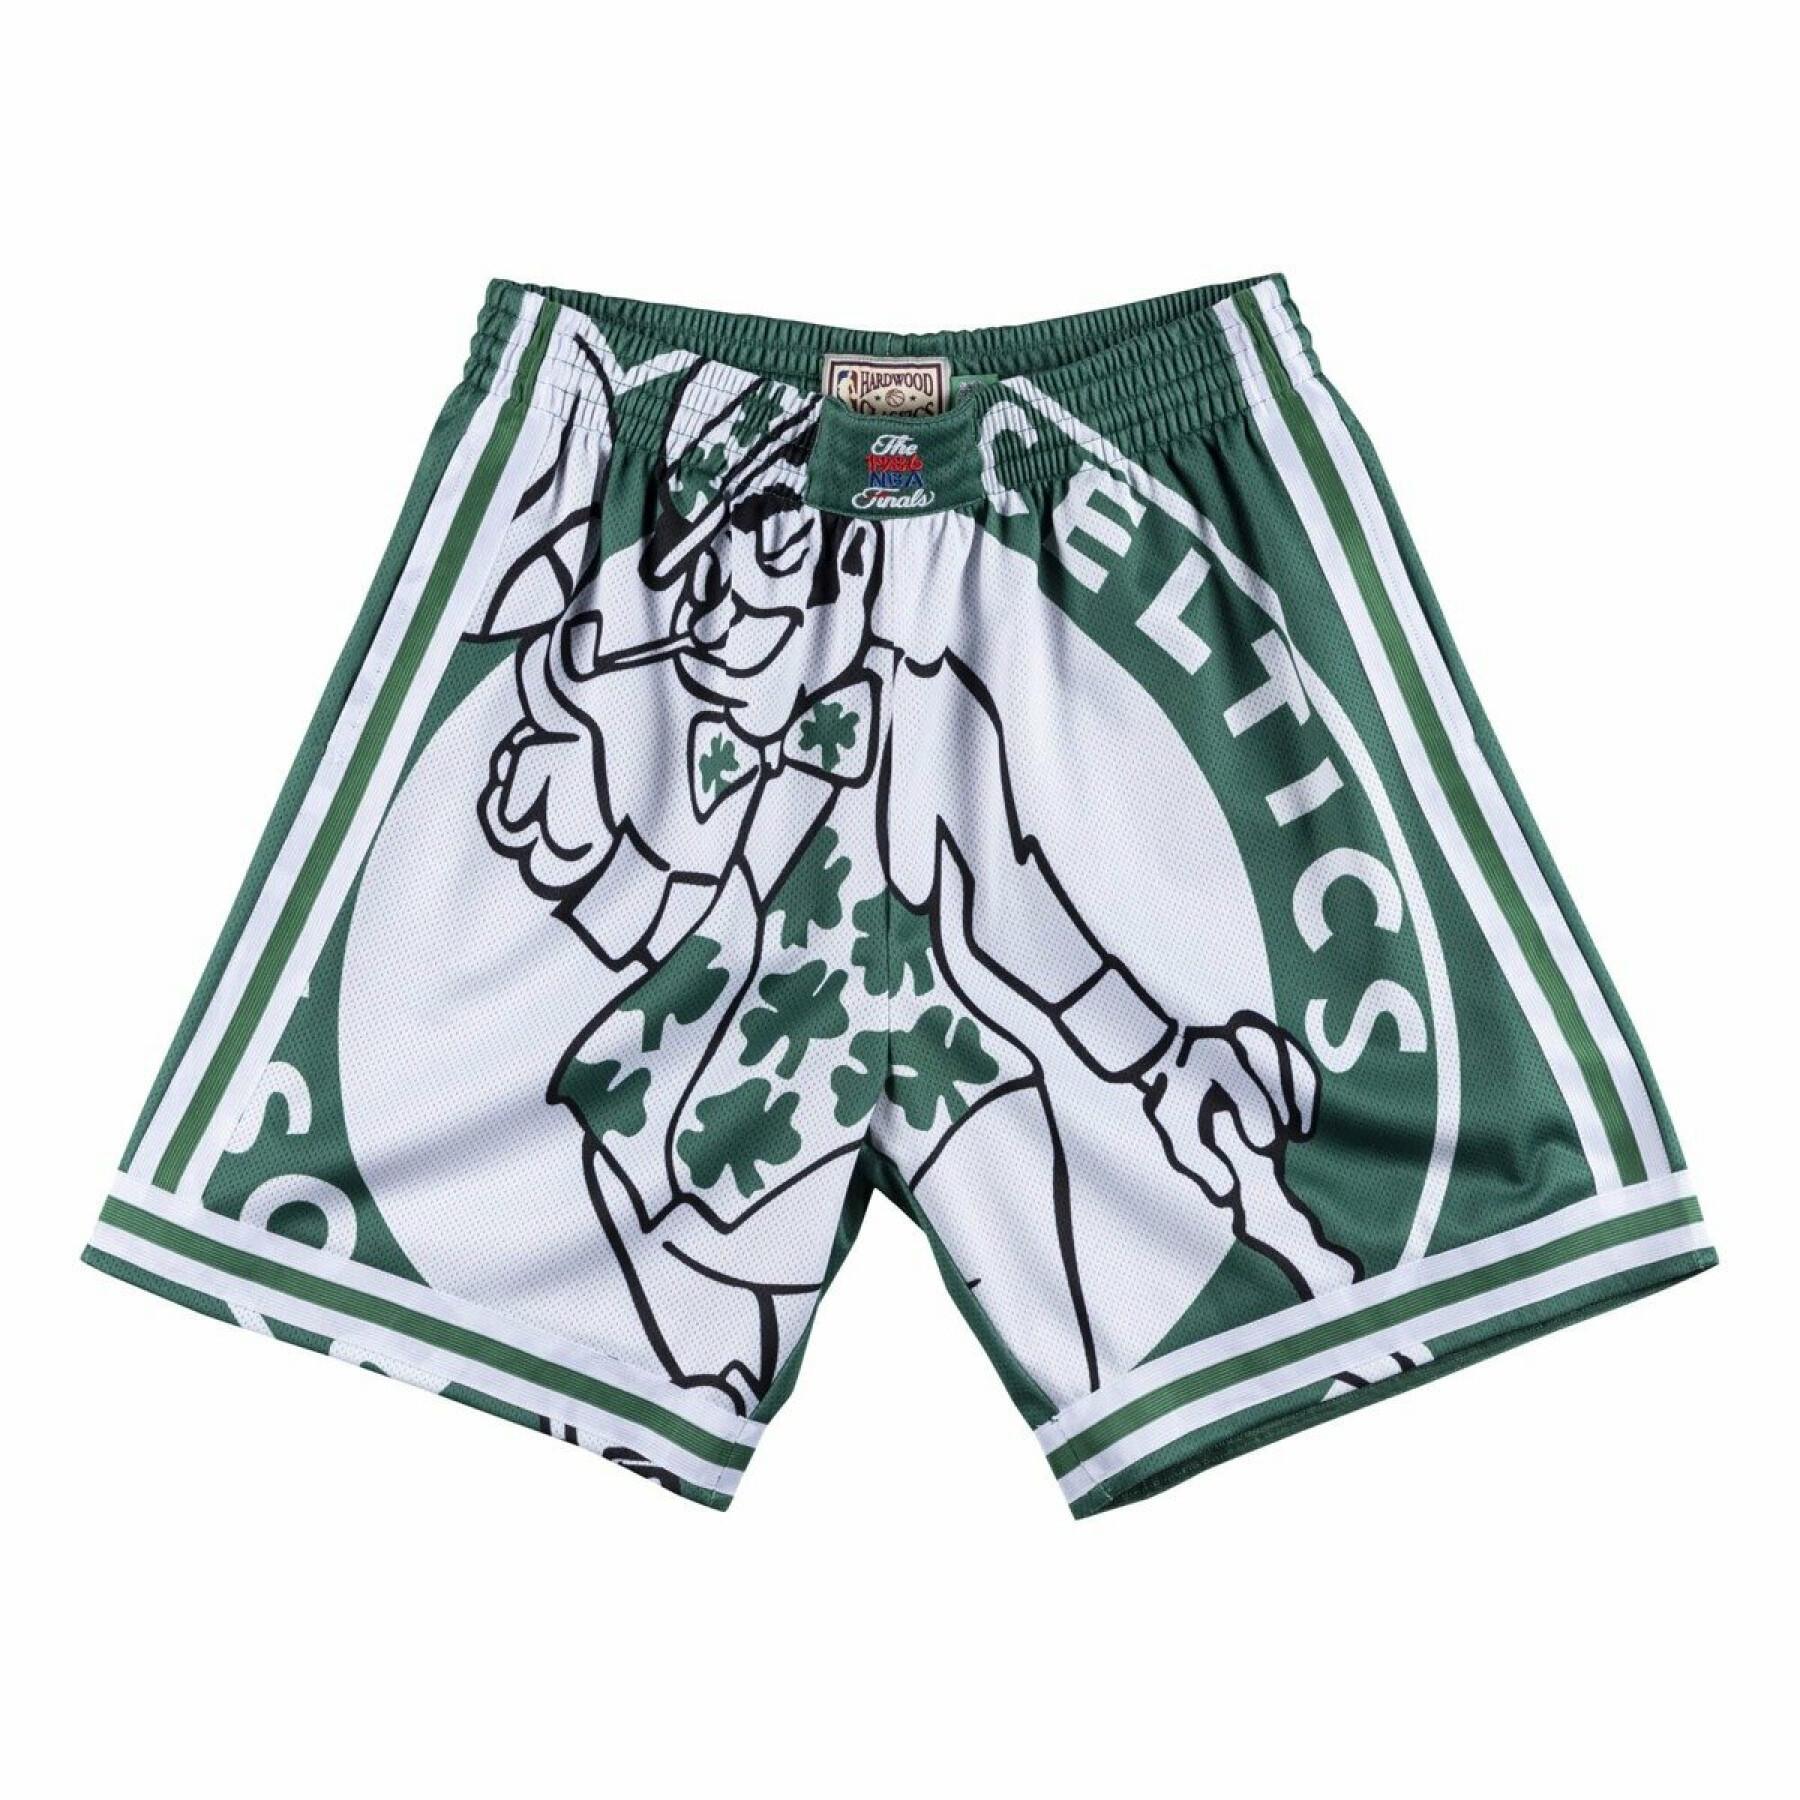 Kurz Boston Celtics big face celtics 1985/86